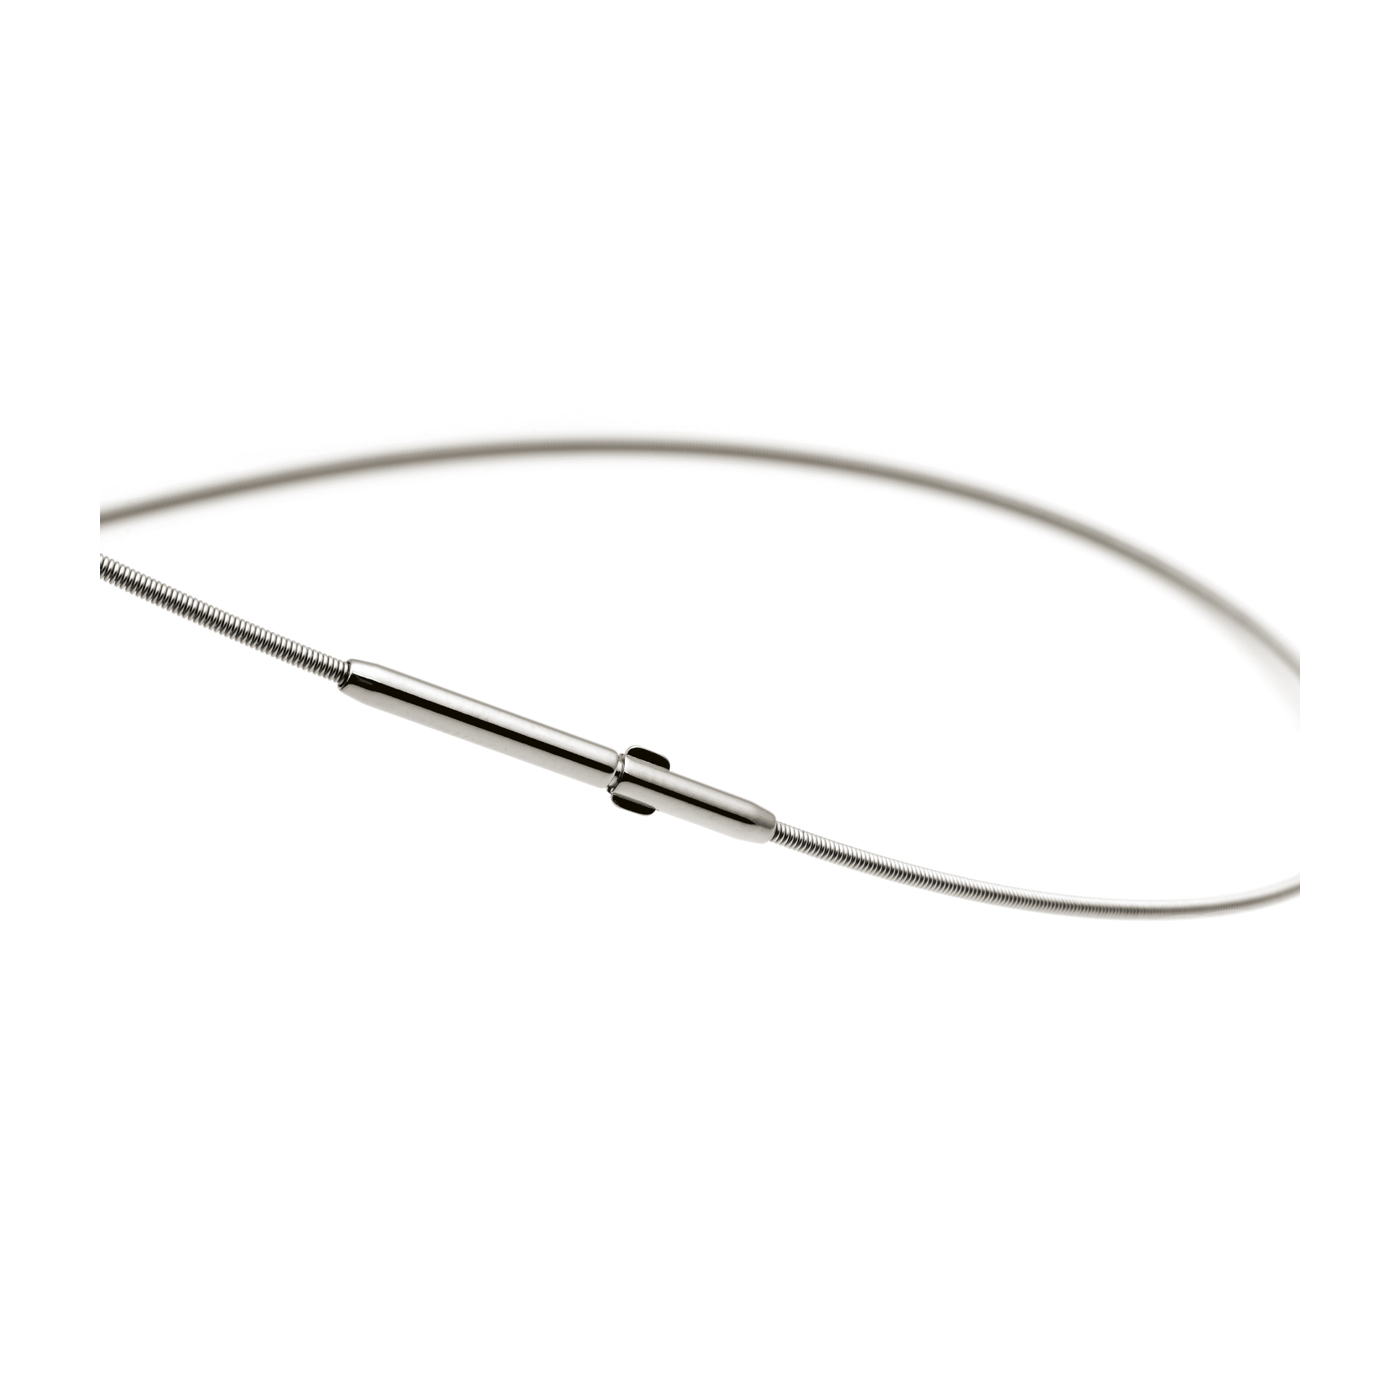 Spiral Necklace, 925Ag, ø 1.1 mm, Clip Closure, 43 cm - 1 piece